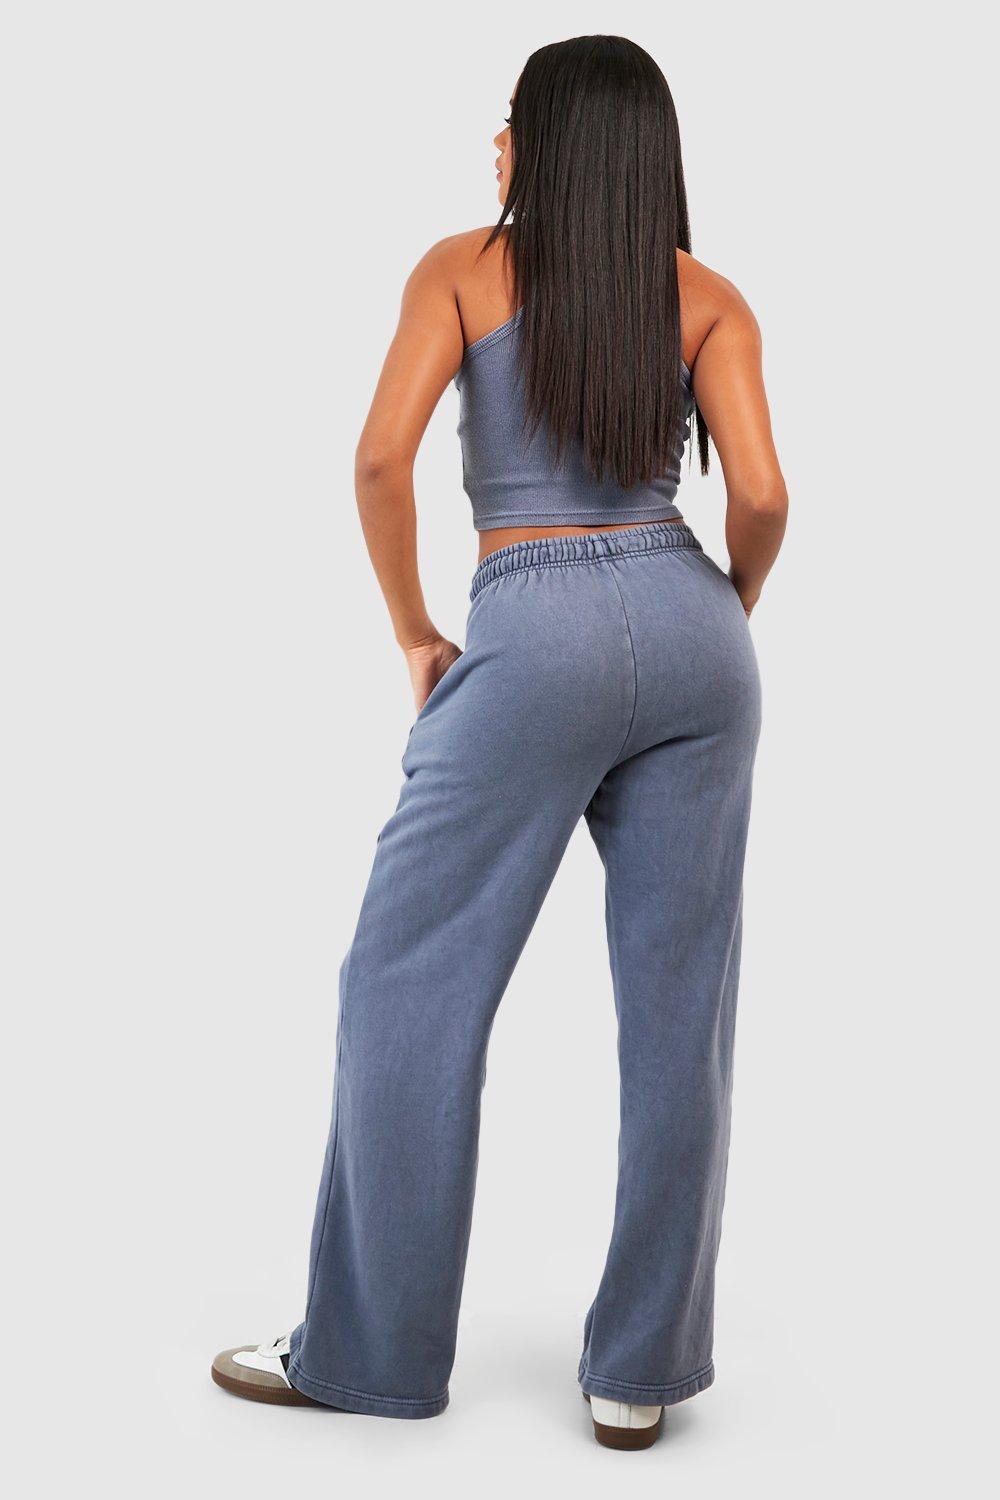 Buy Lyush Ice Blue Denim Jogger Jeans For Girls Online at Best Price